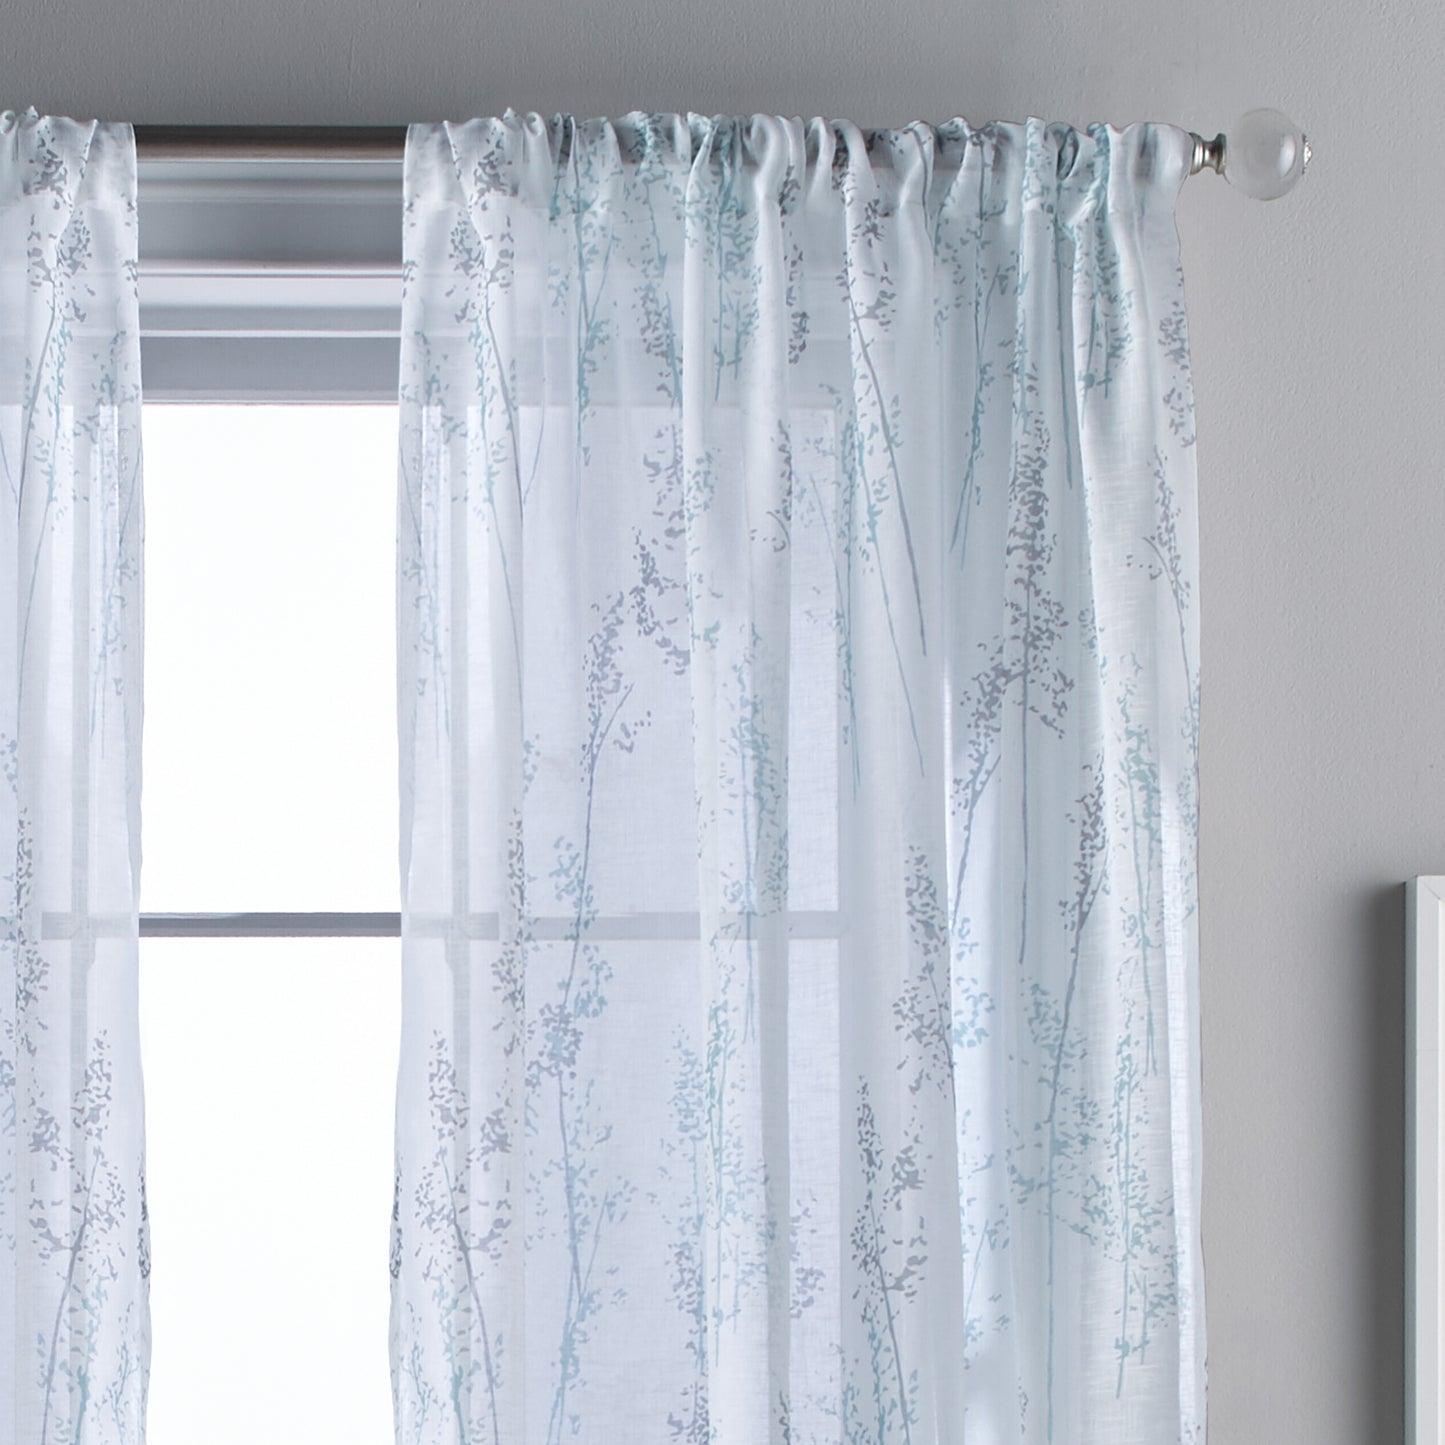 DKNY Whisper Window Curtain Panel Aqua